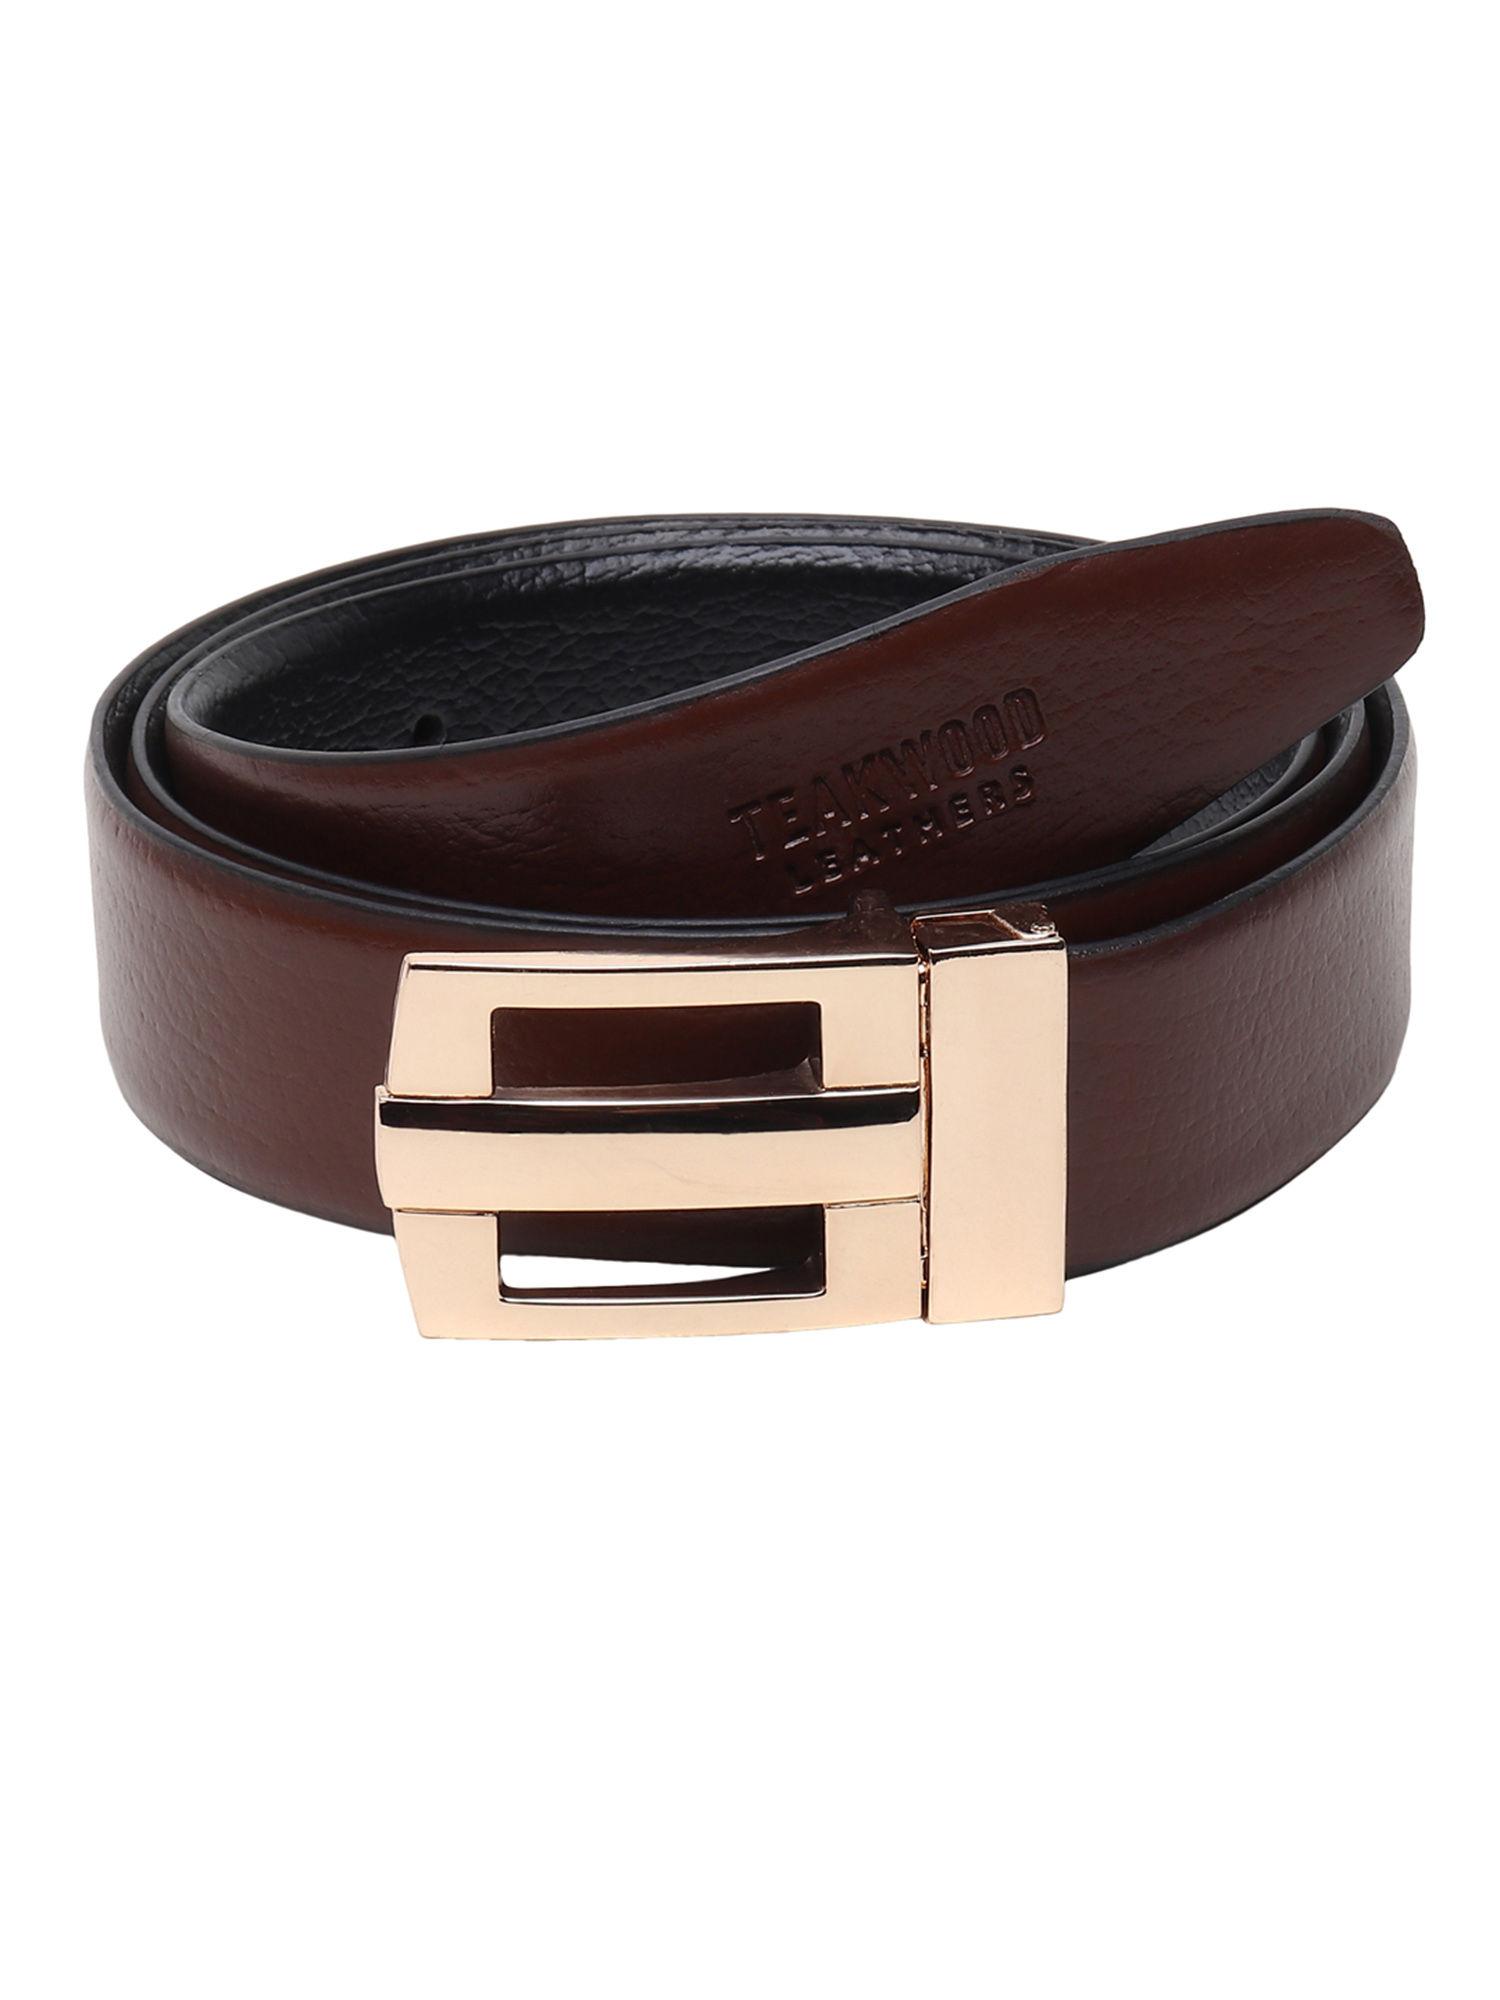 men black & brown textured leather semi formal reversible belt